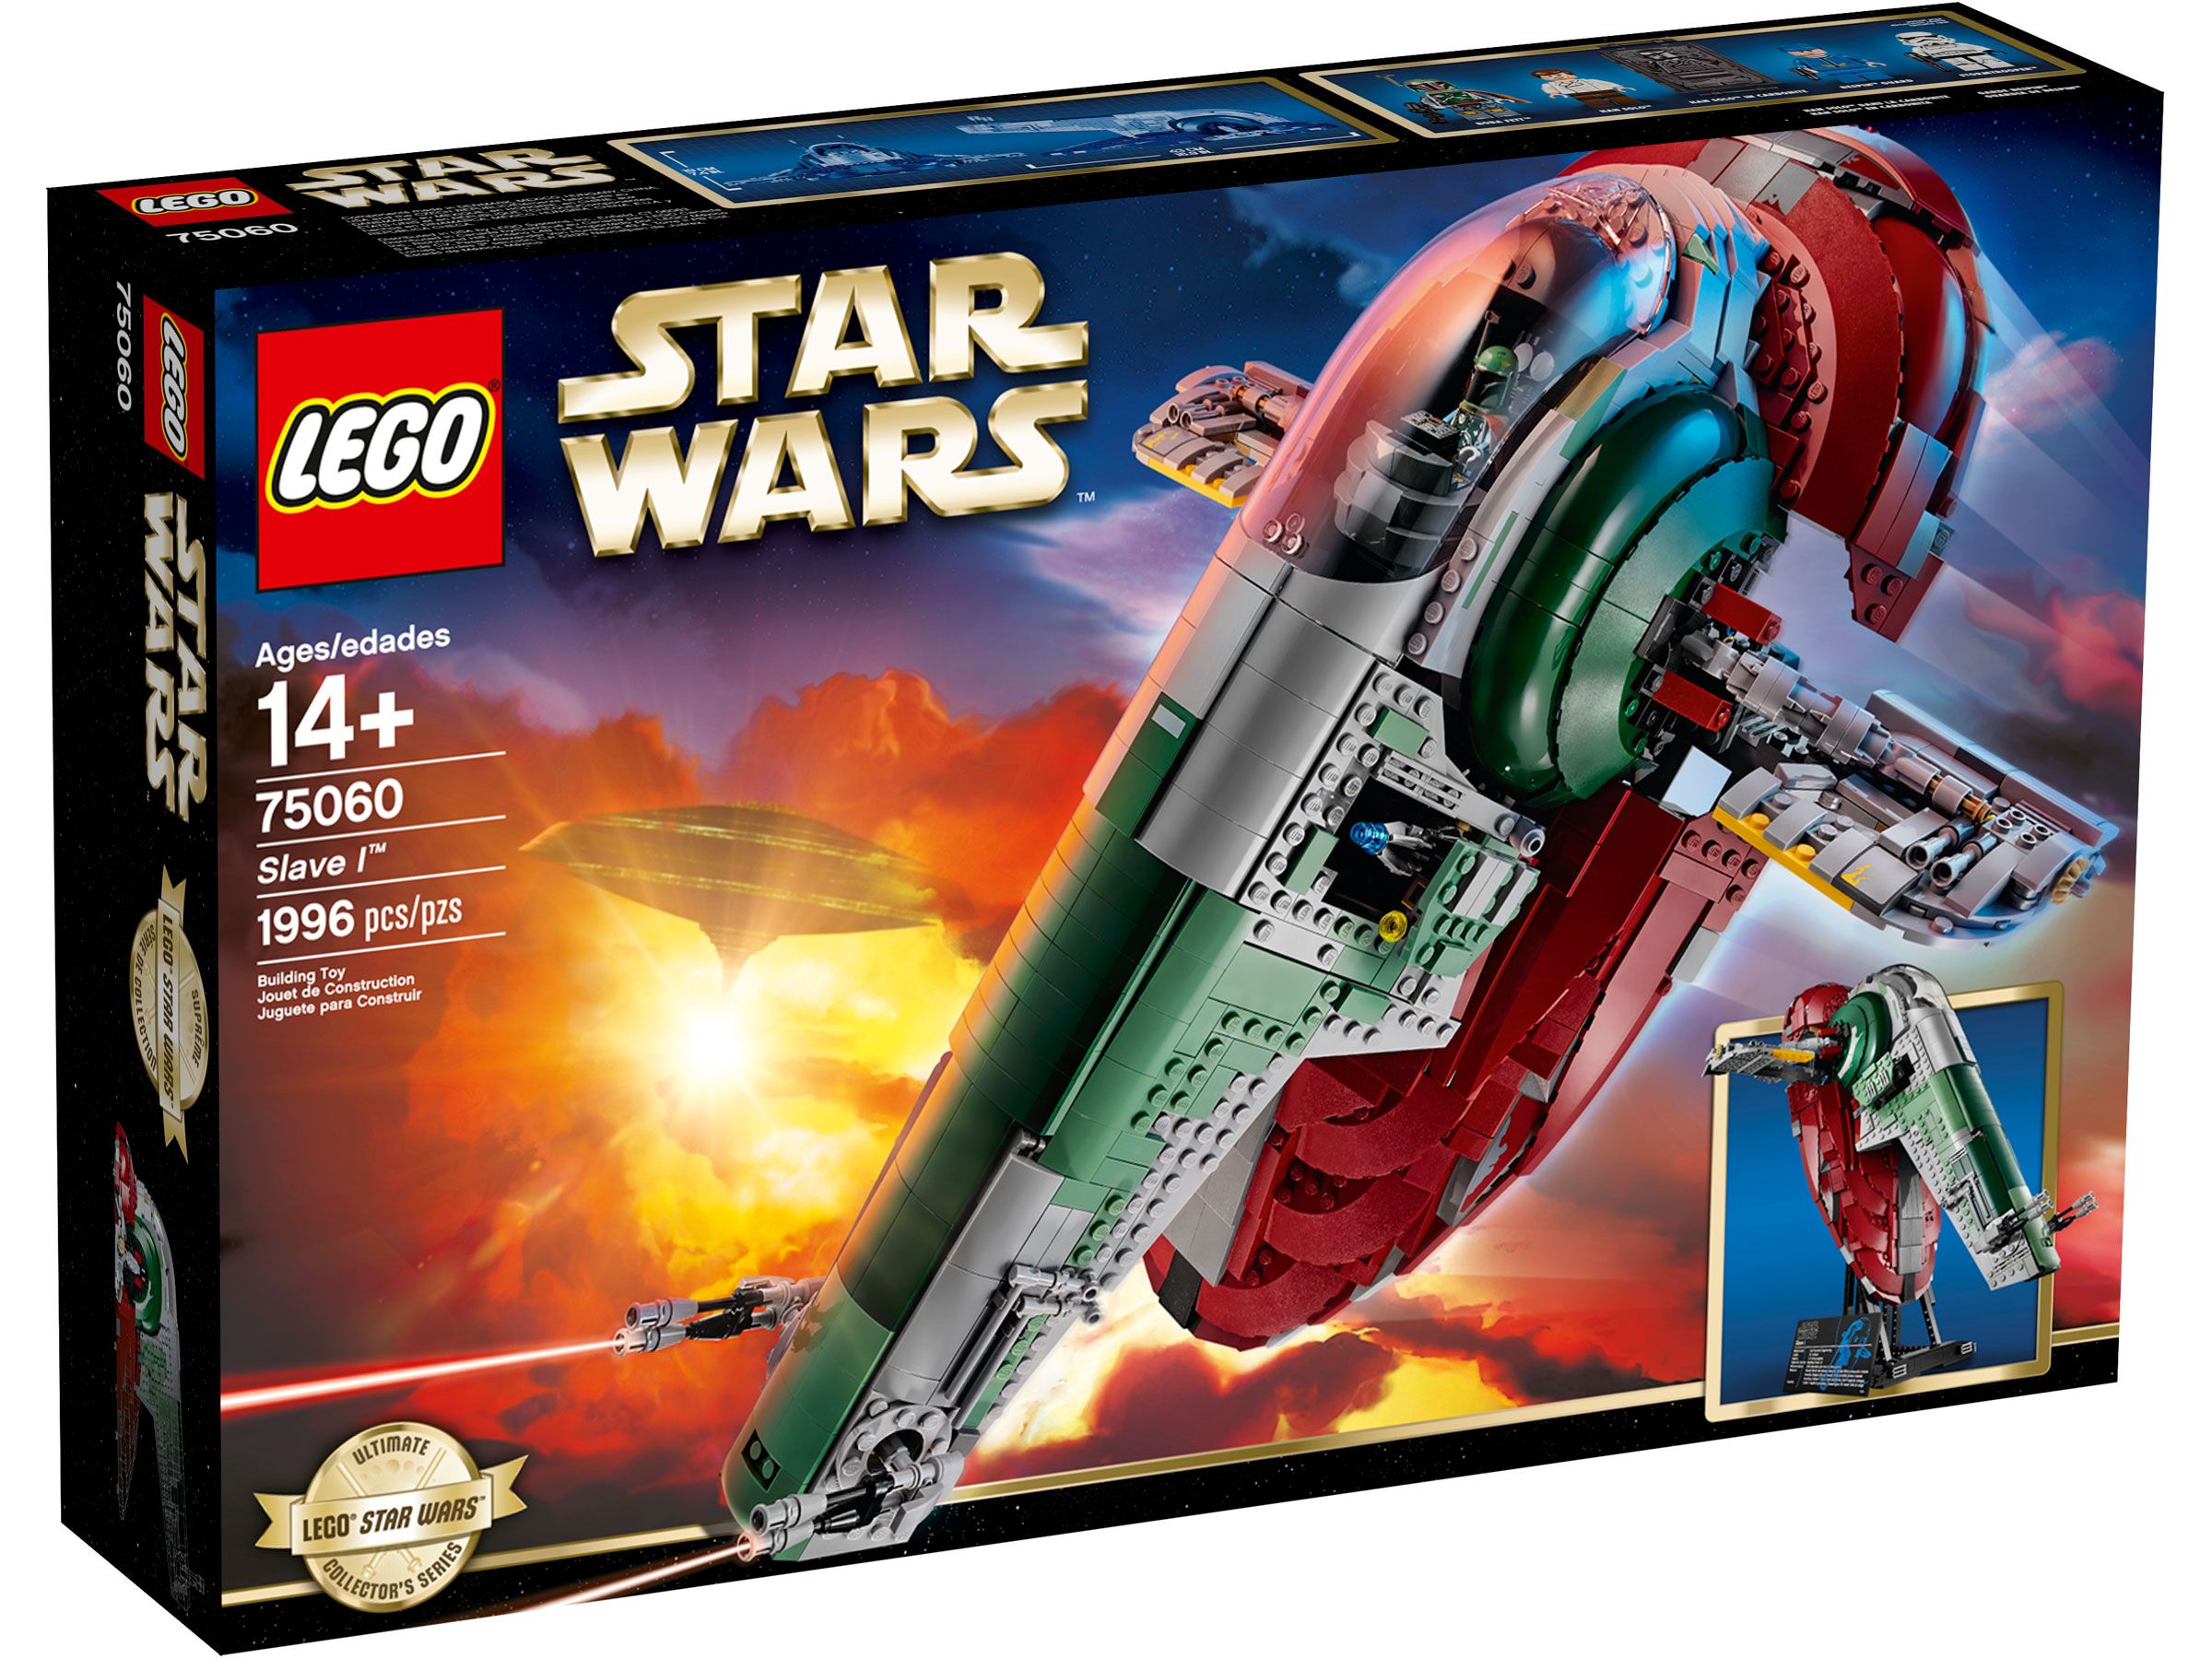 LEGO Star Wars 75060 UCS Slave I LEGO_75060_box1_na.jpg